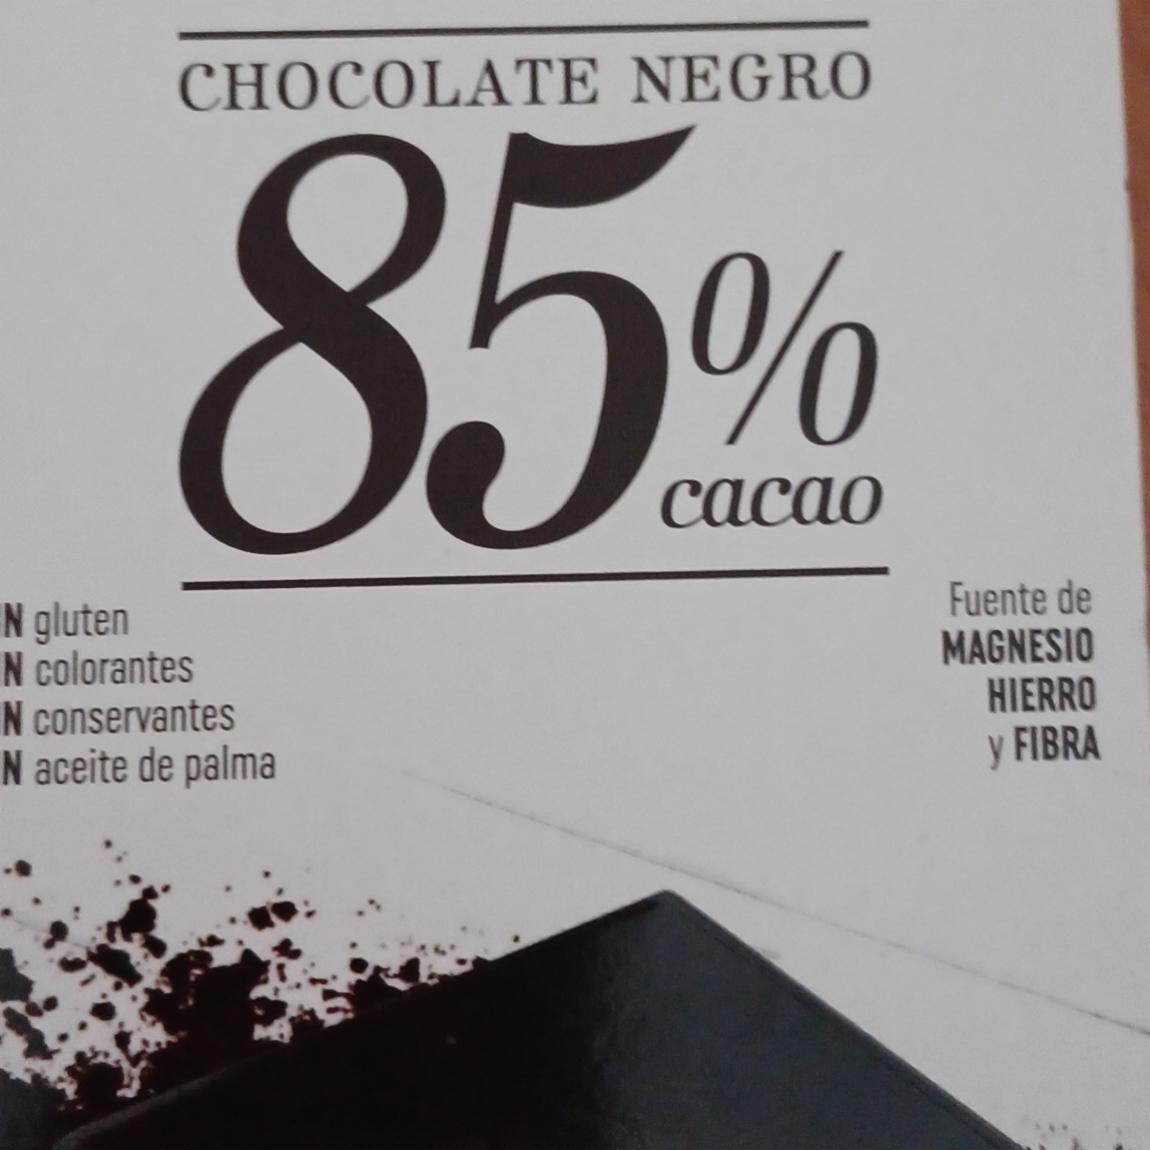 Fotografie - Chocolate negro 85% cacao Lacasa